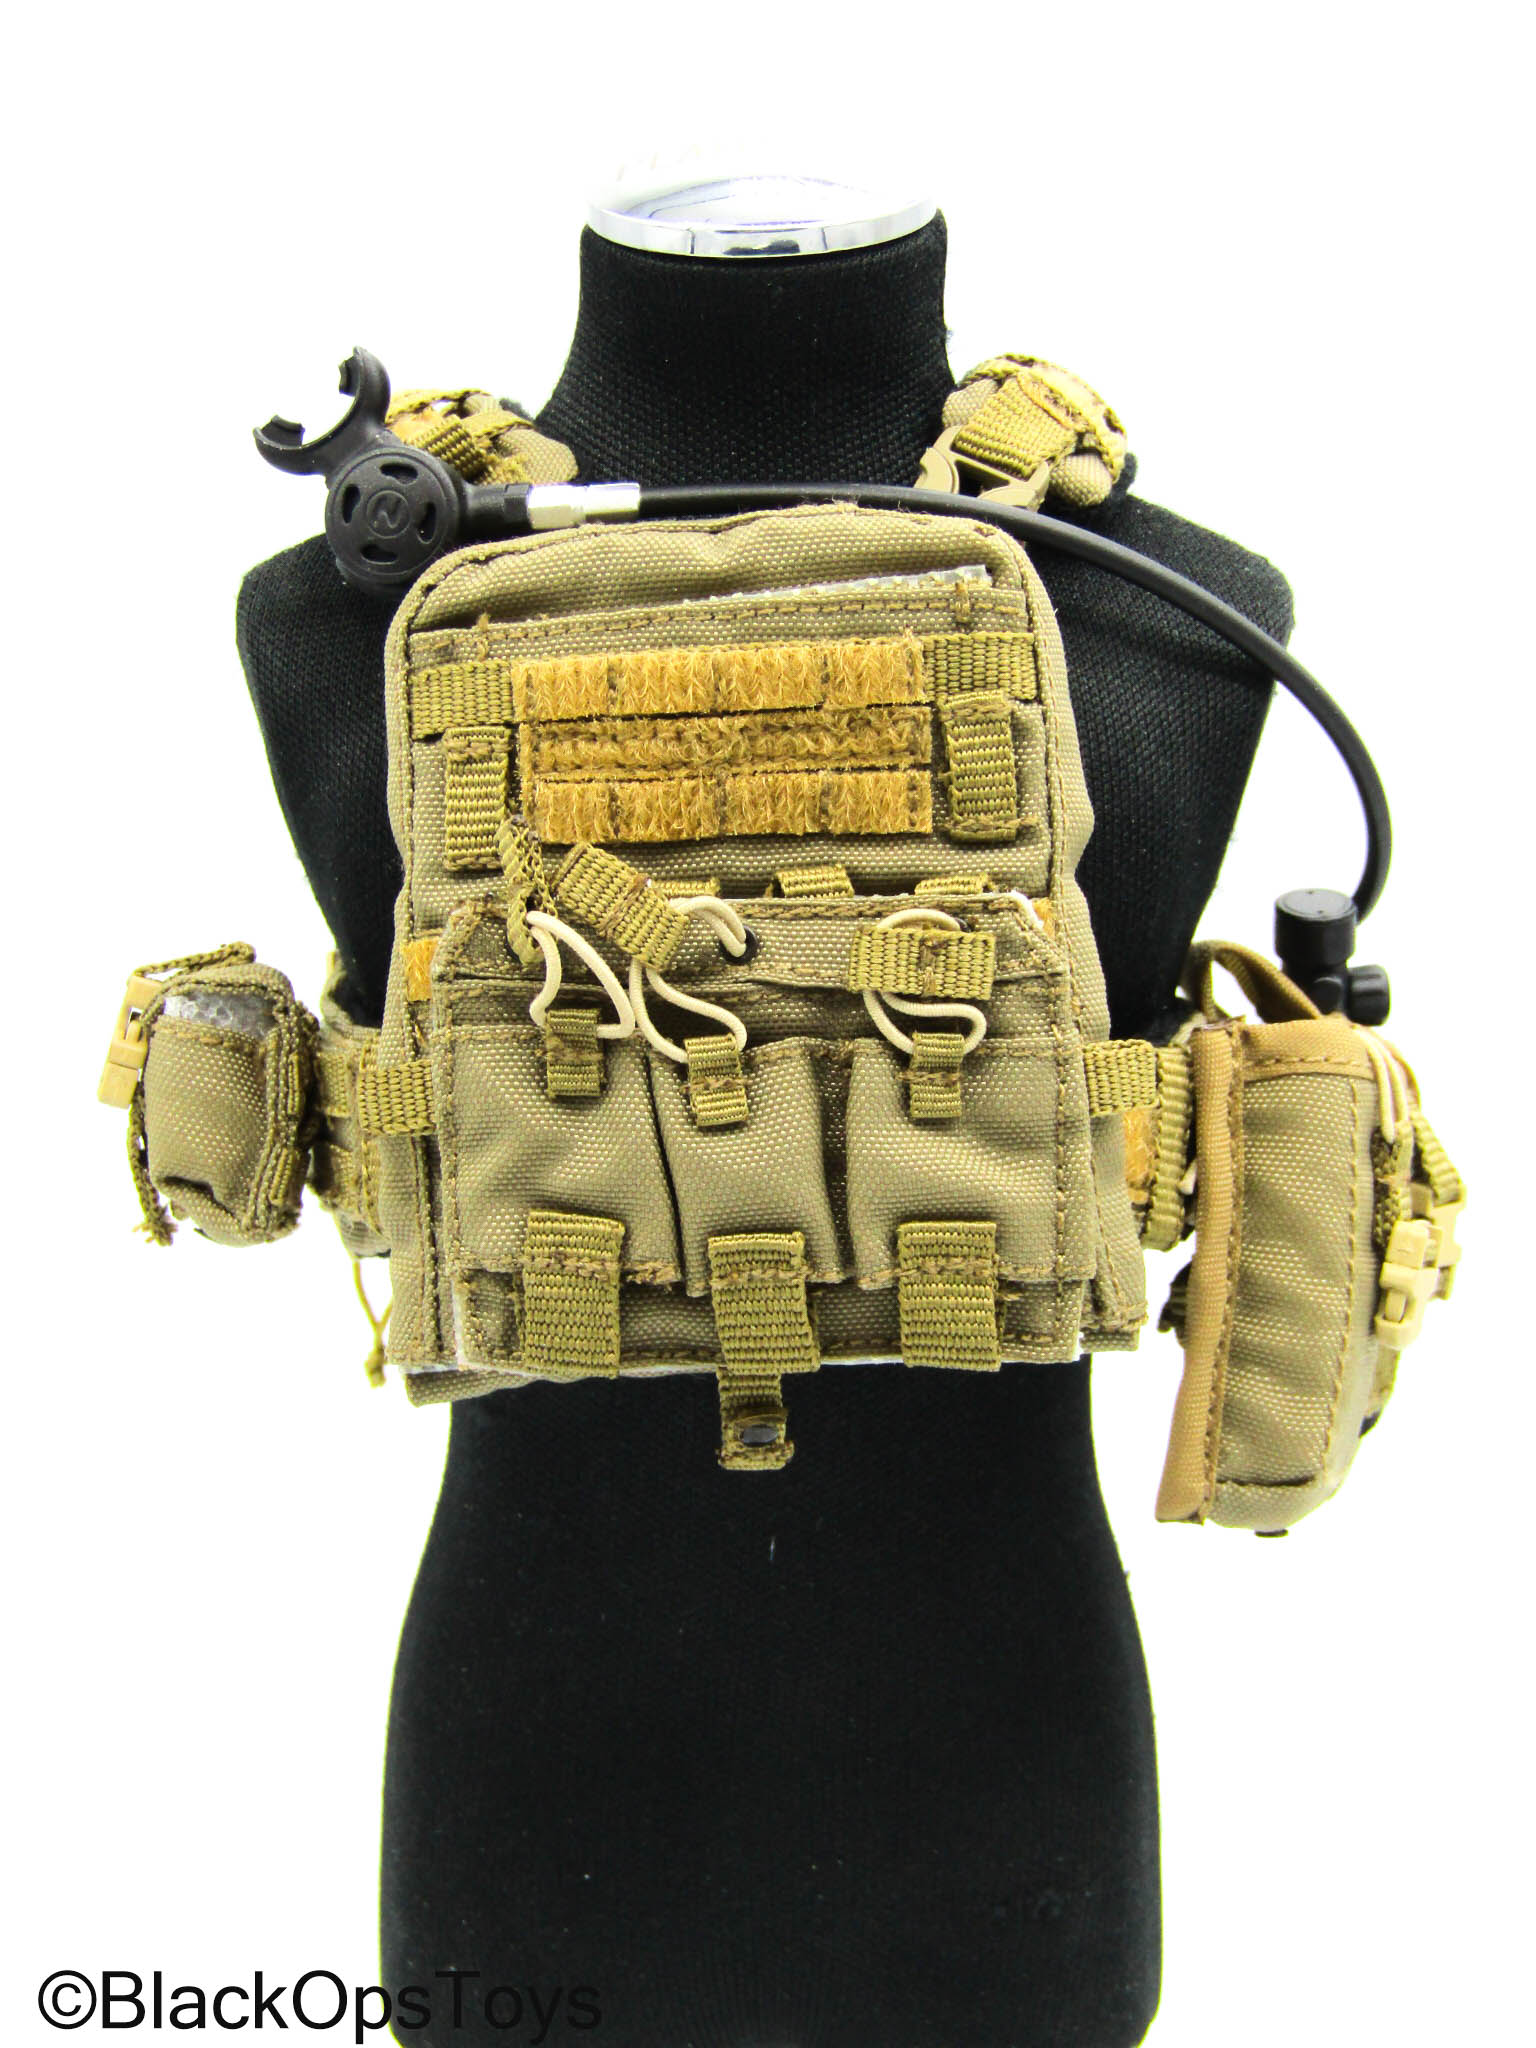 marine tactical vest